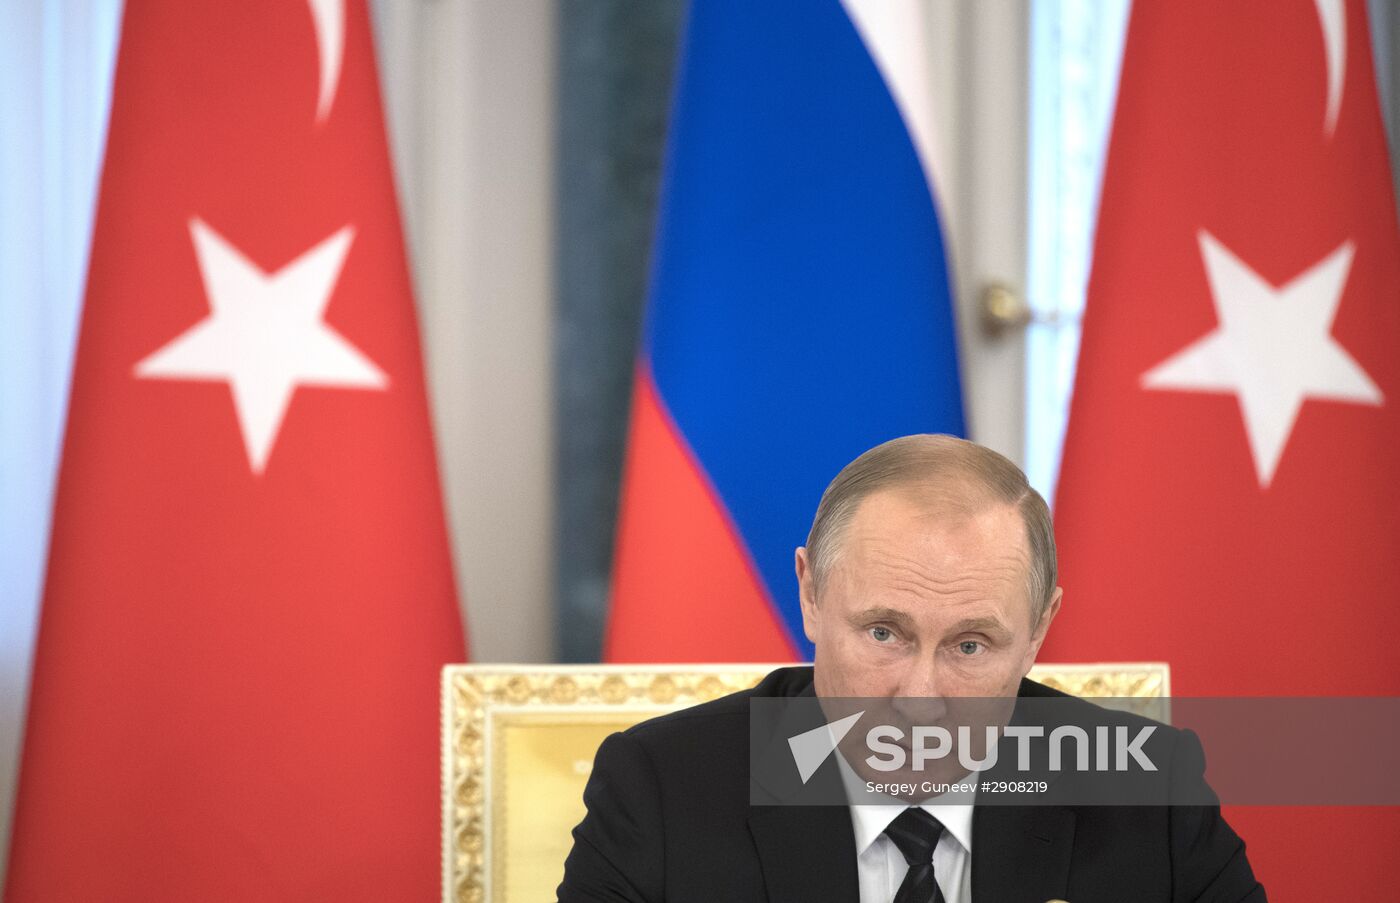 Meeting of Russian President Vladimir Putin and Turkish President Recep Tayyip Erdoğan in St Petersburg